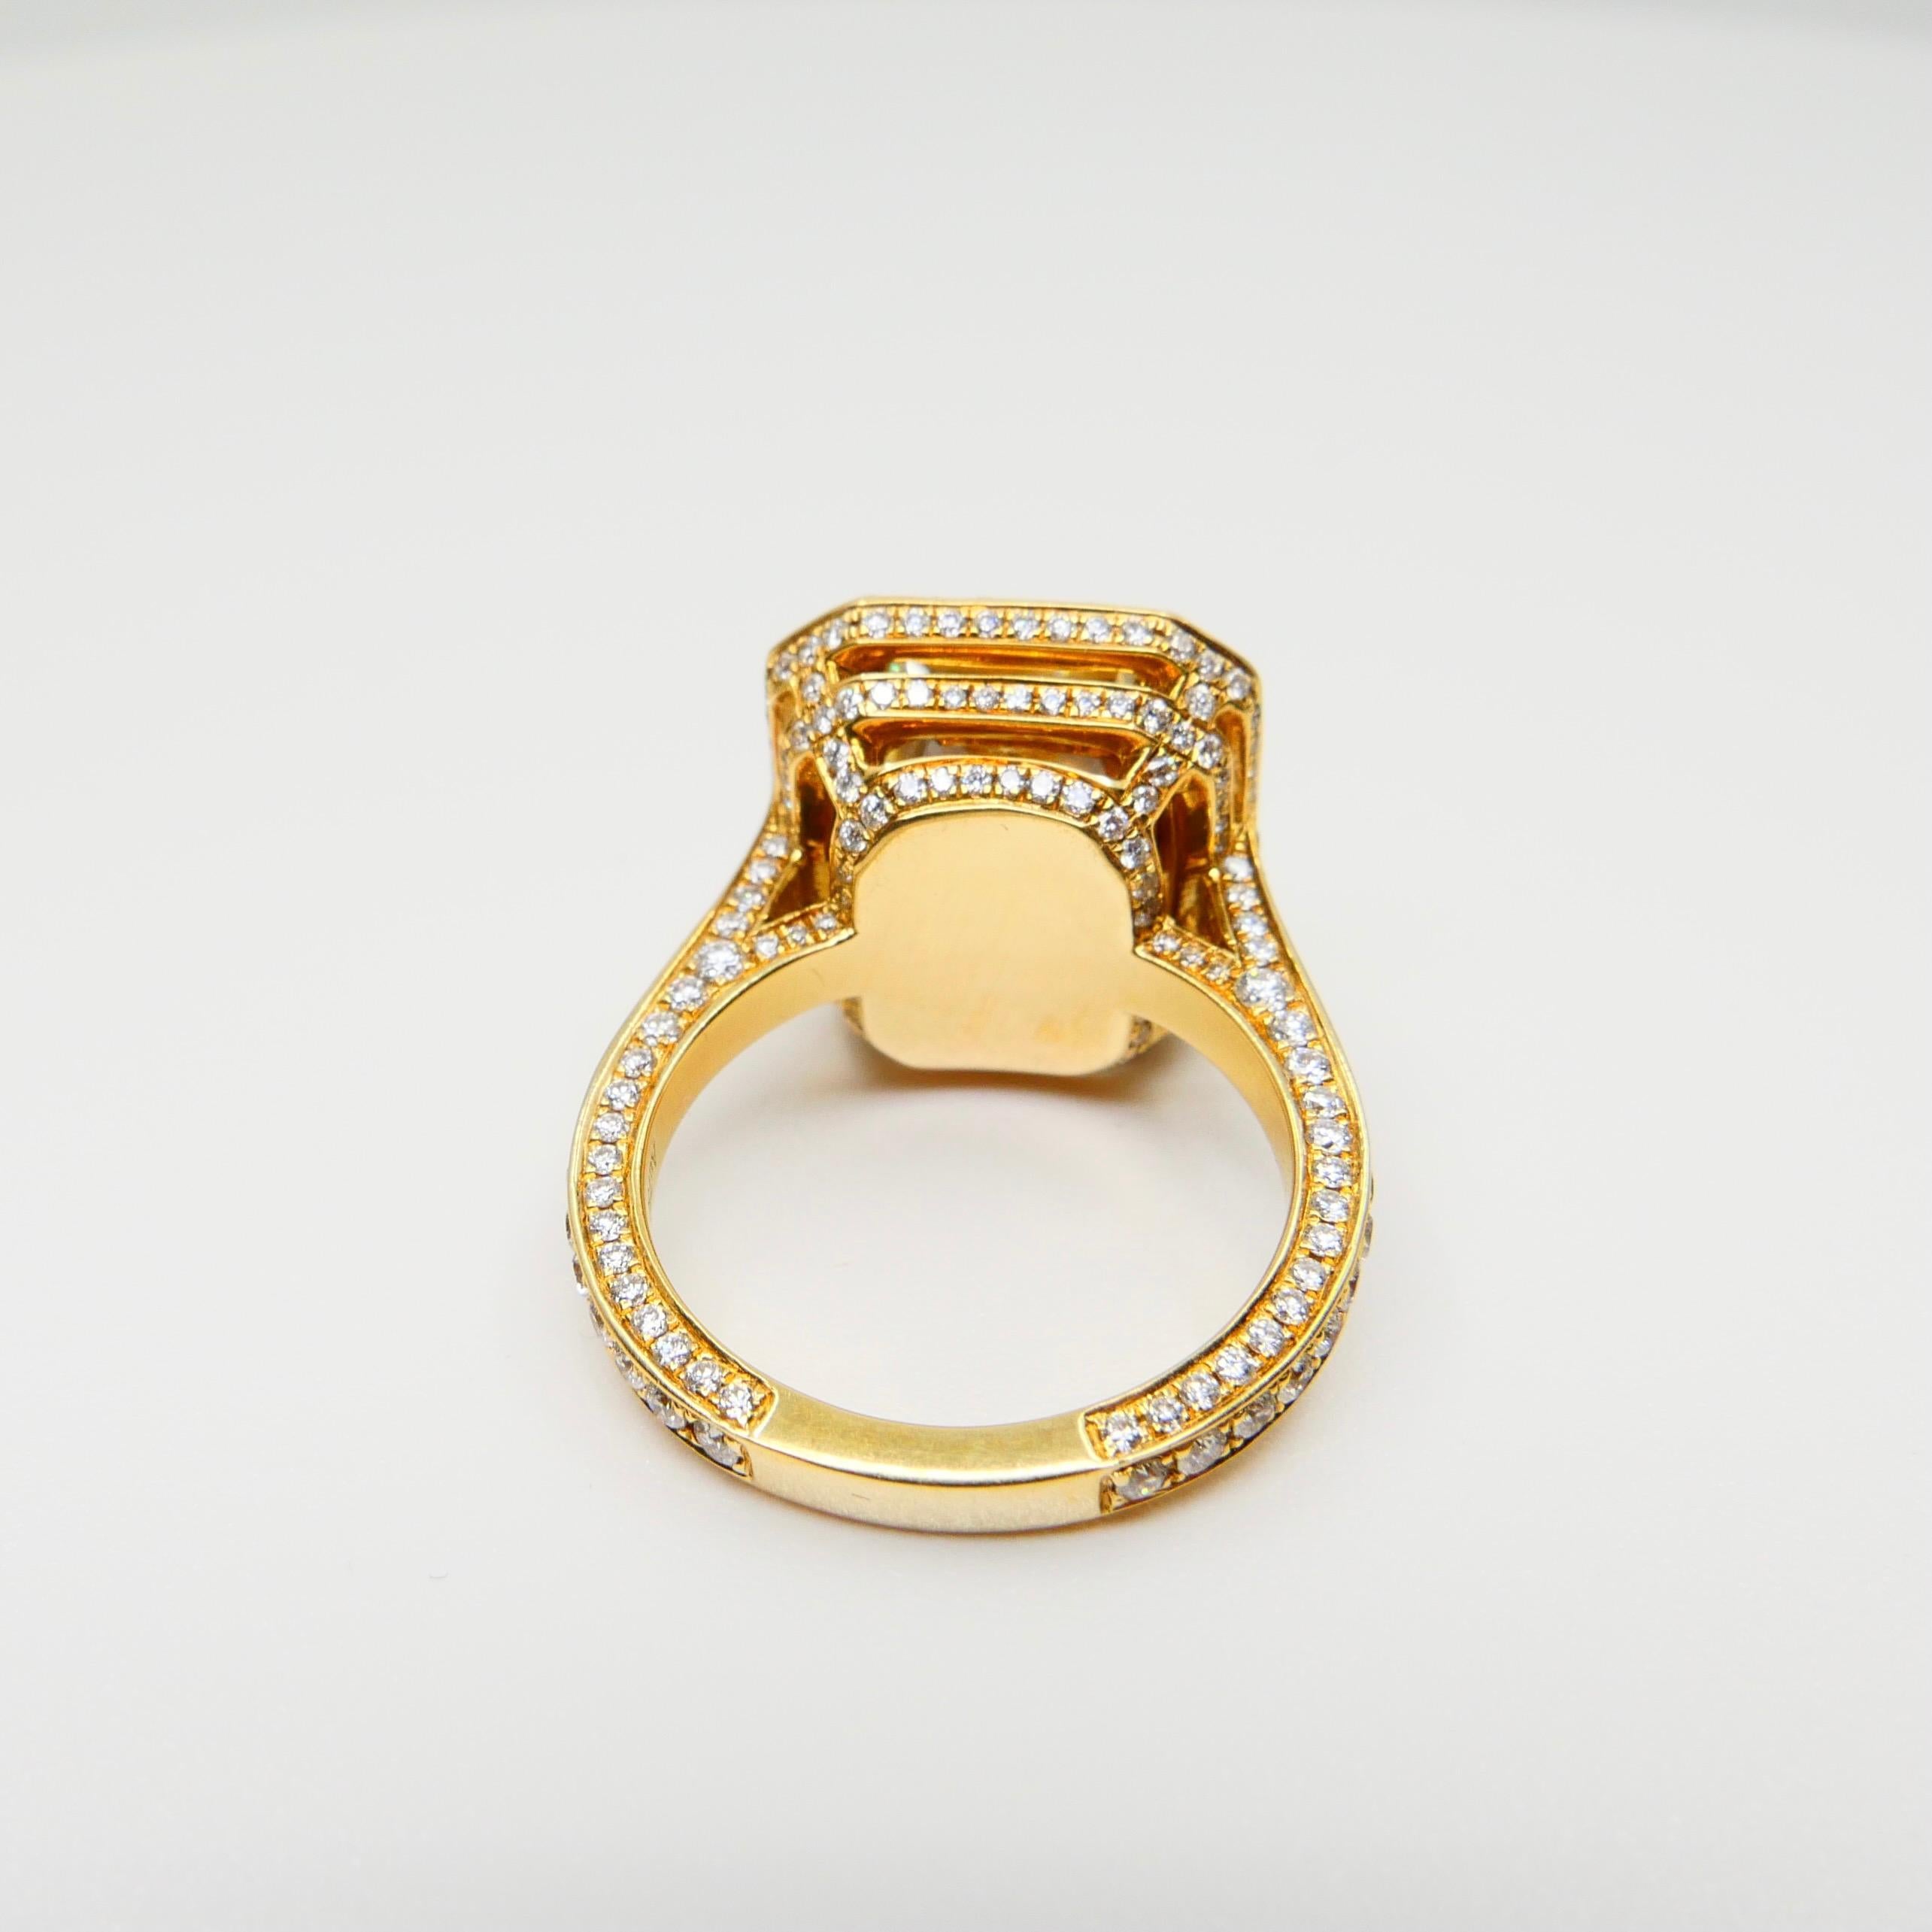 GIA Certified 9 Carat Yellow Diamond Engagement Ring, Oversized & Eye Clean 5